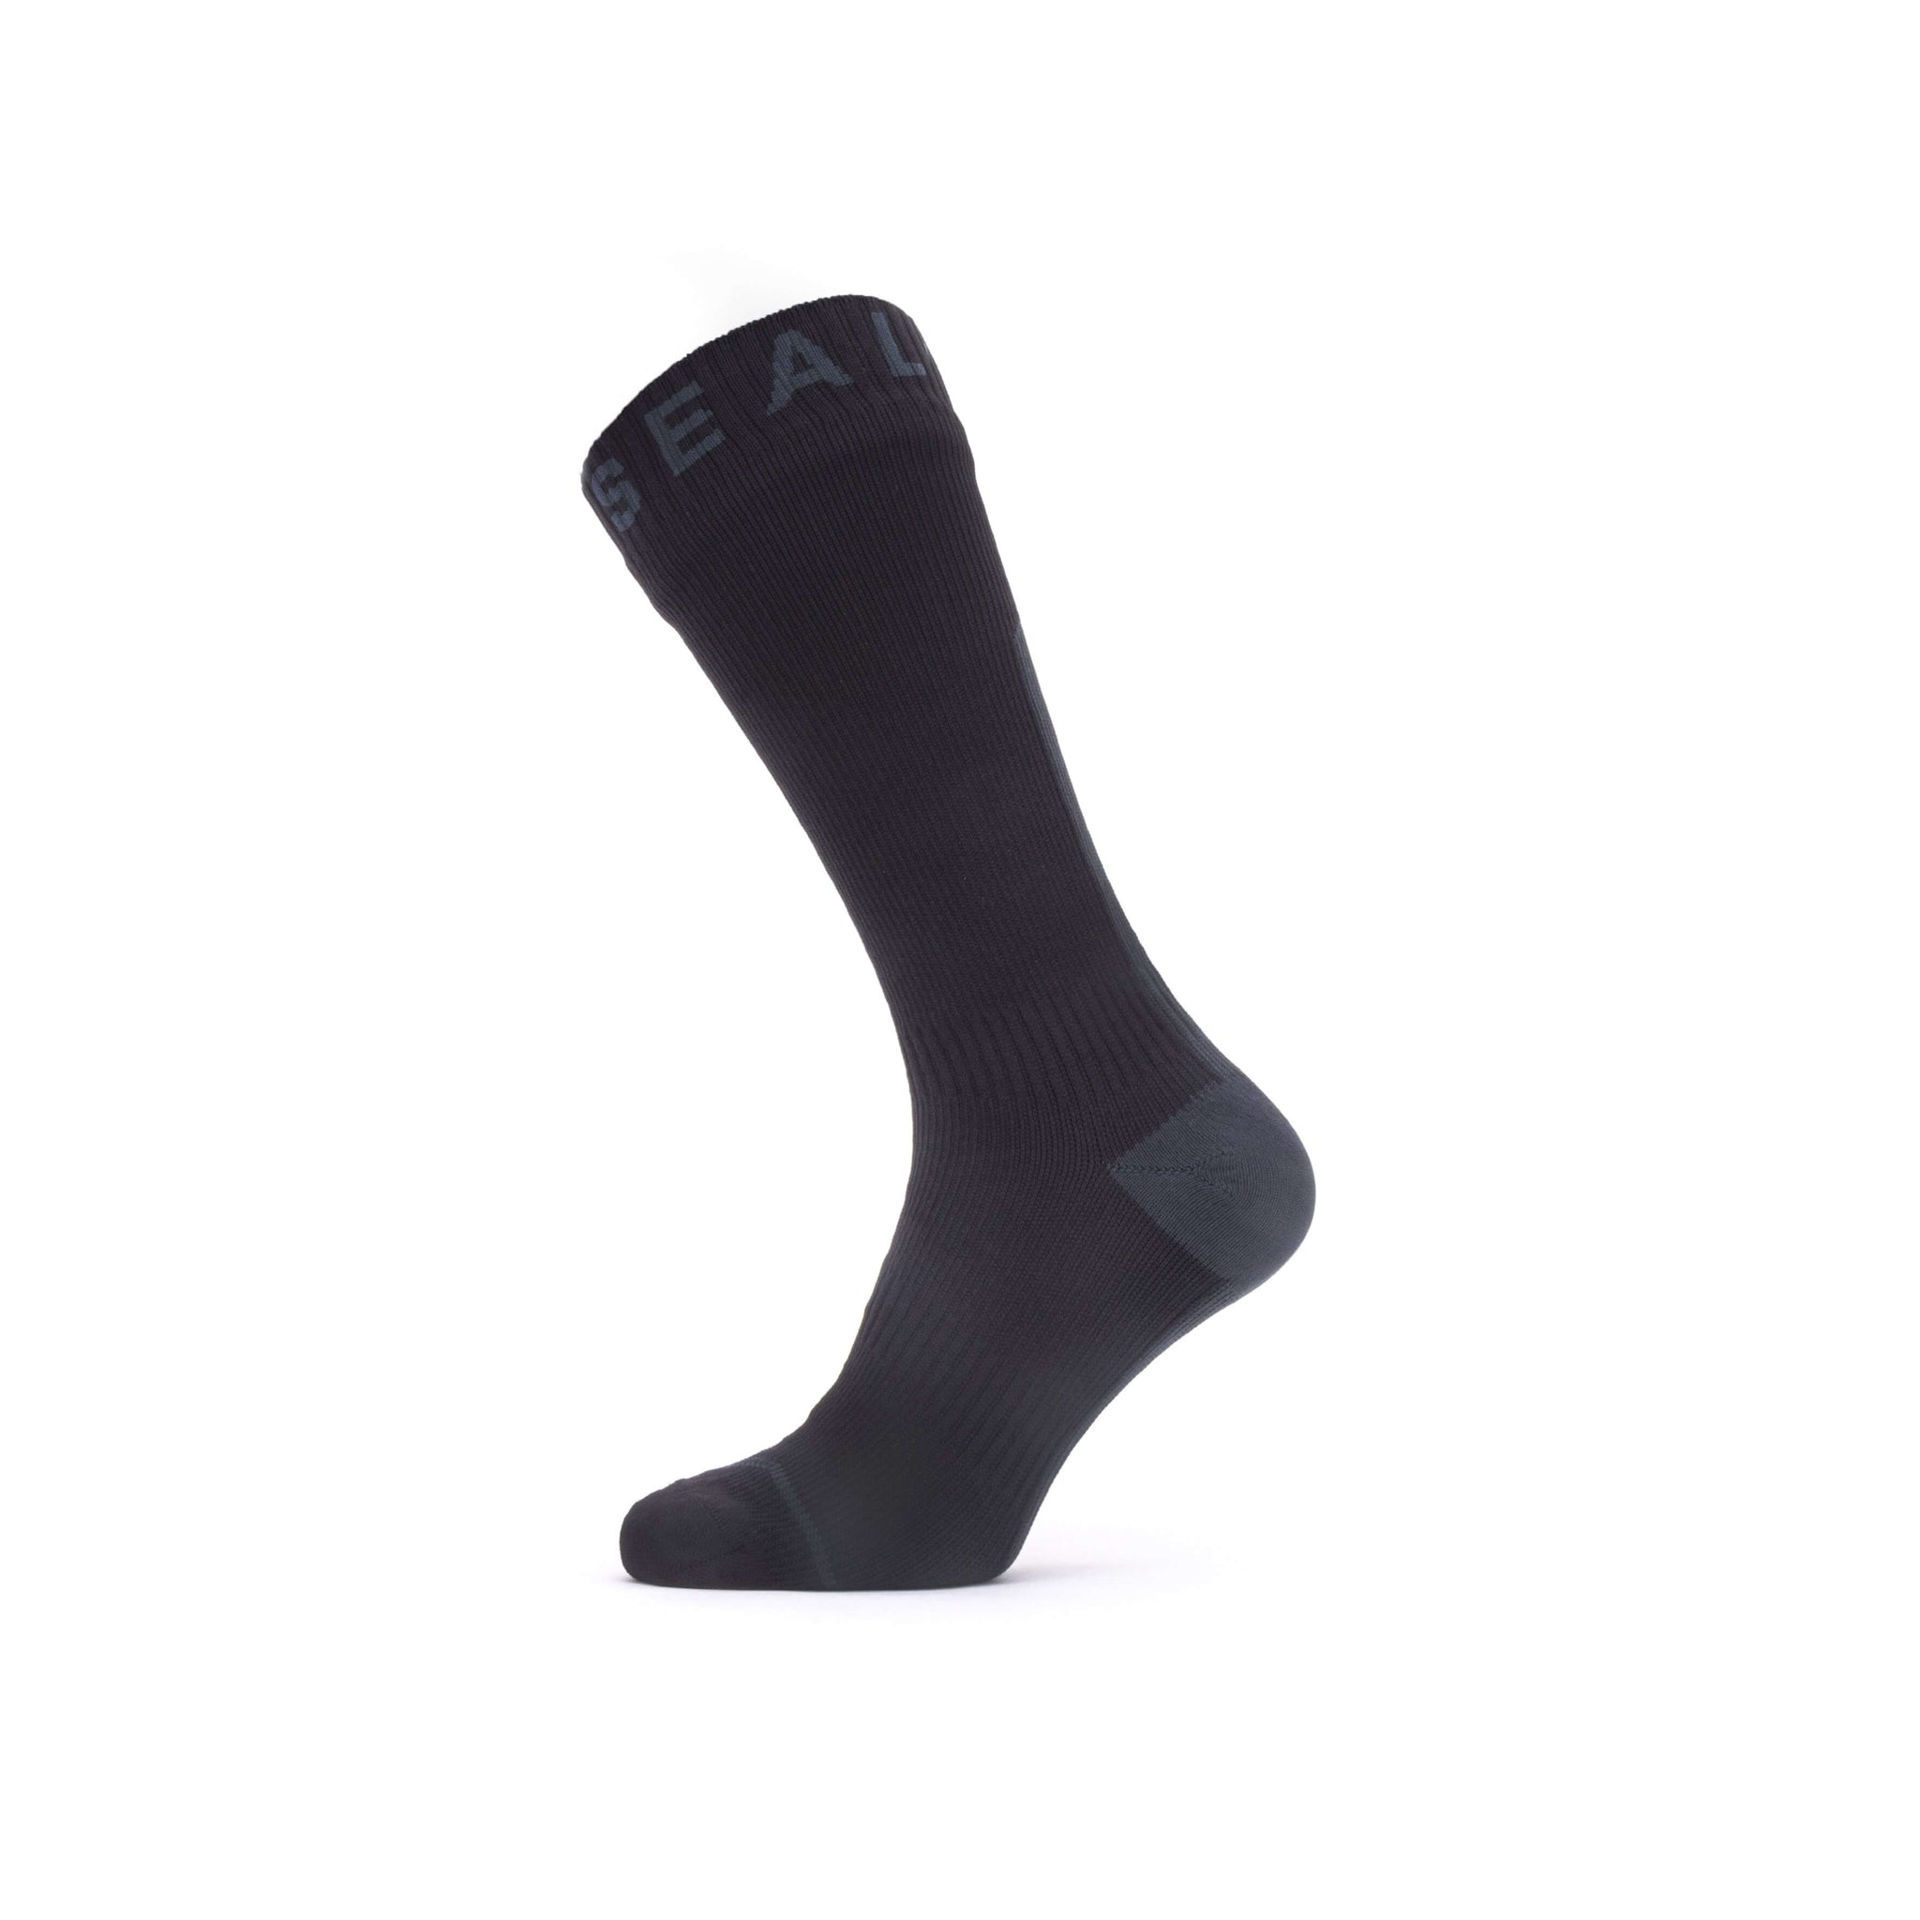 Sealskinz Waterproof All Weather Mid Sock with Hydrostop in Black / Grey